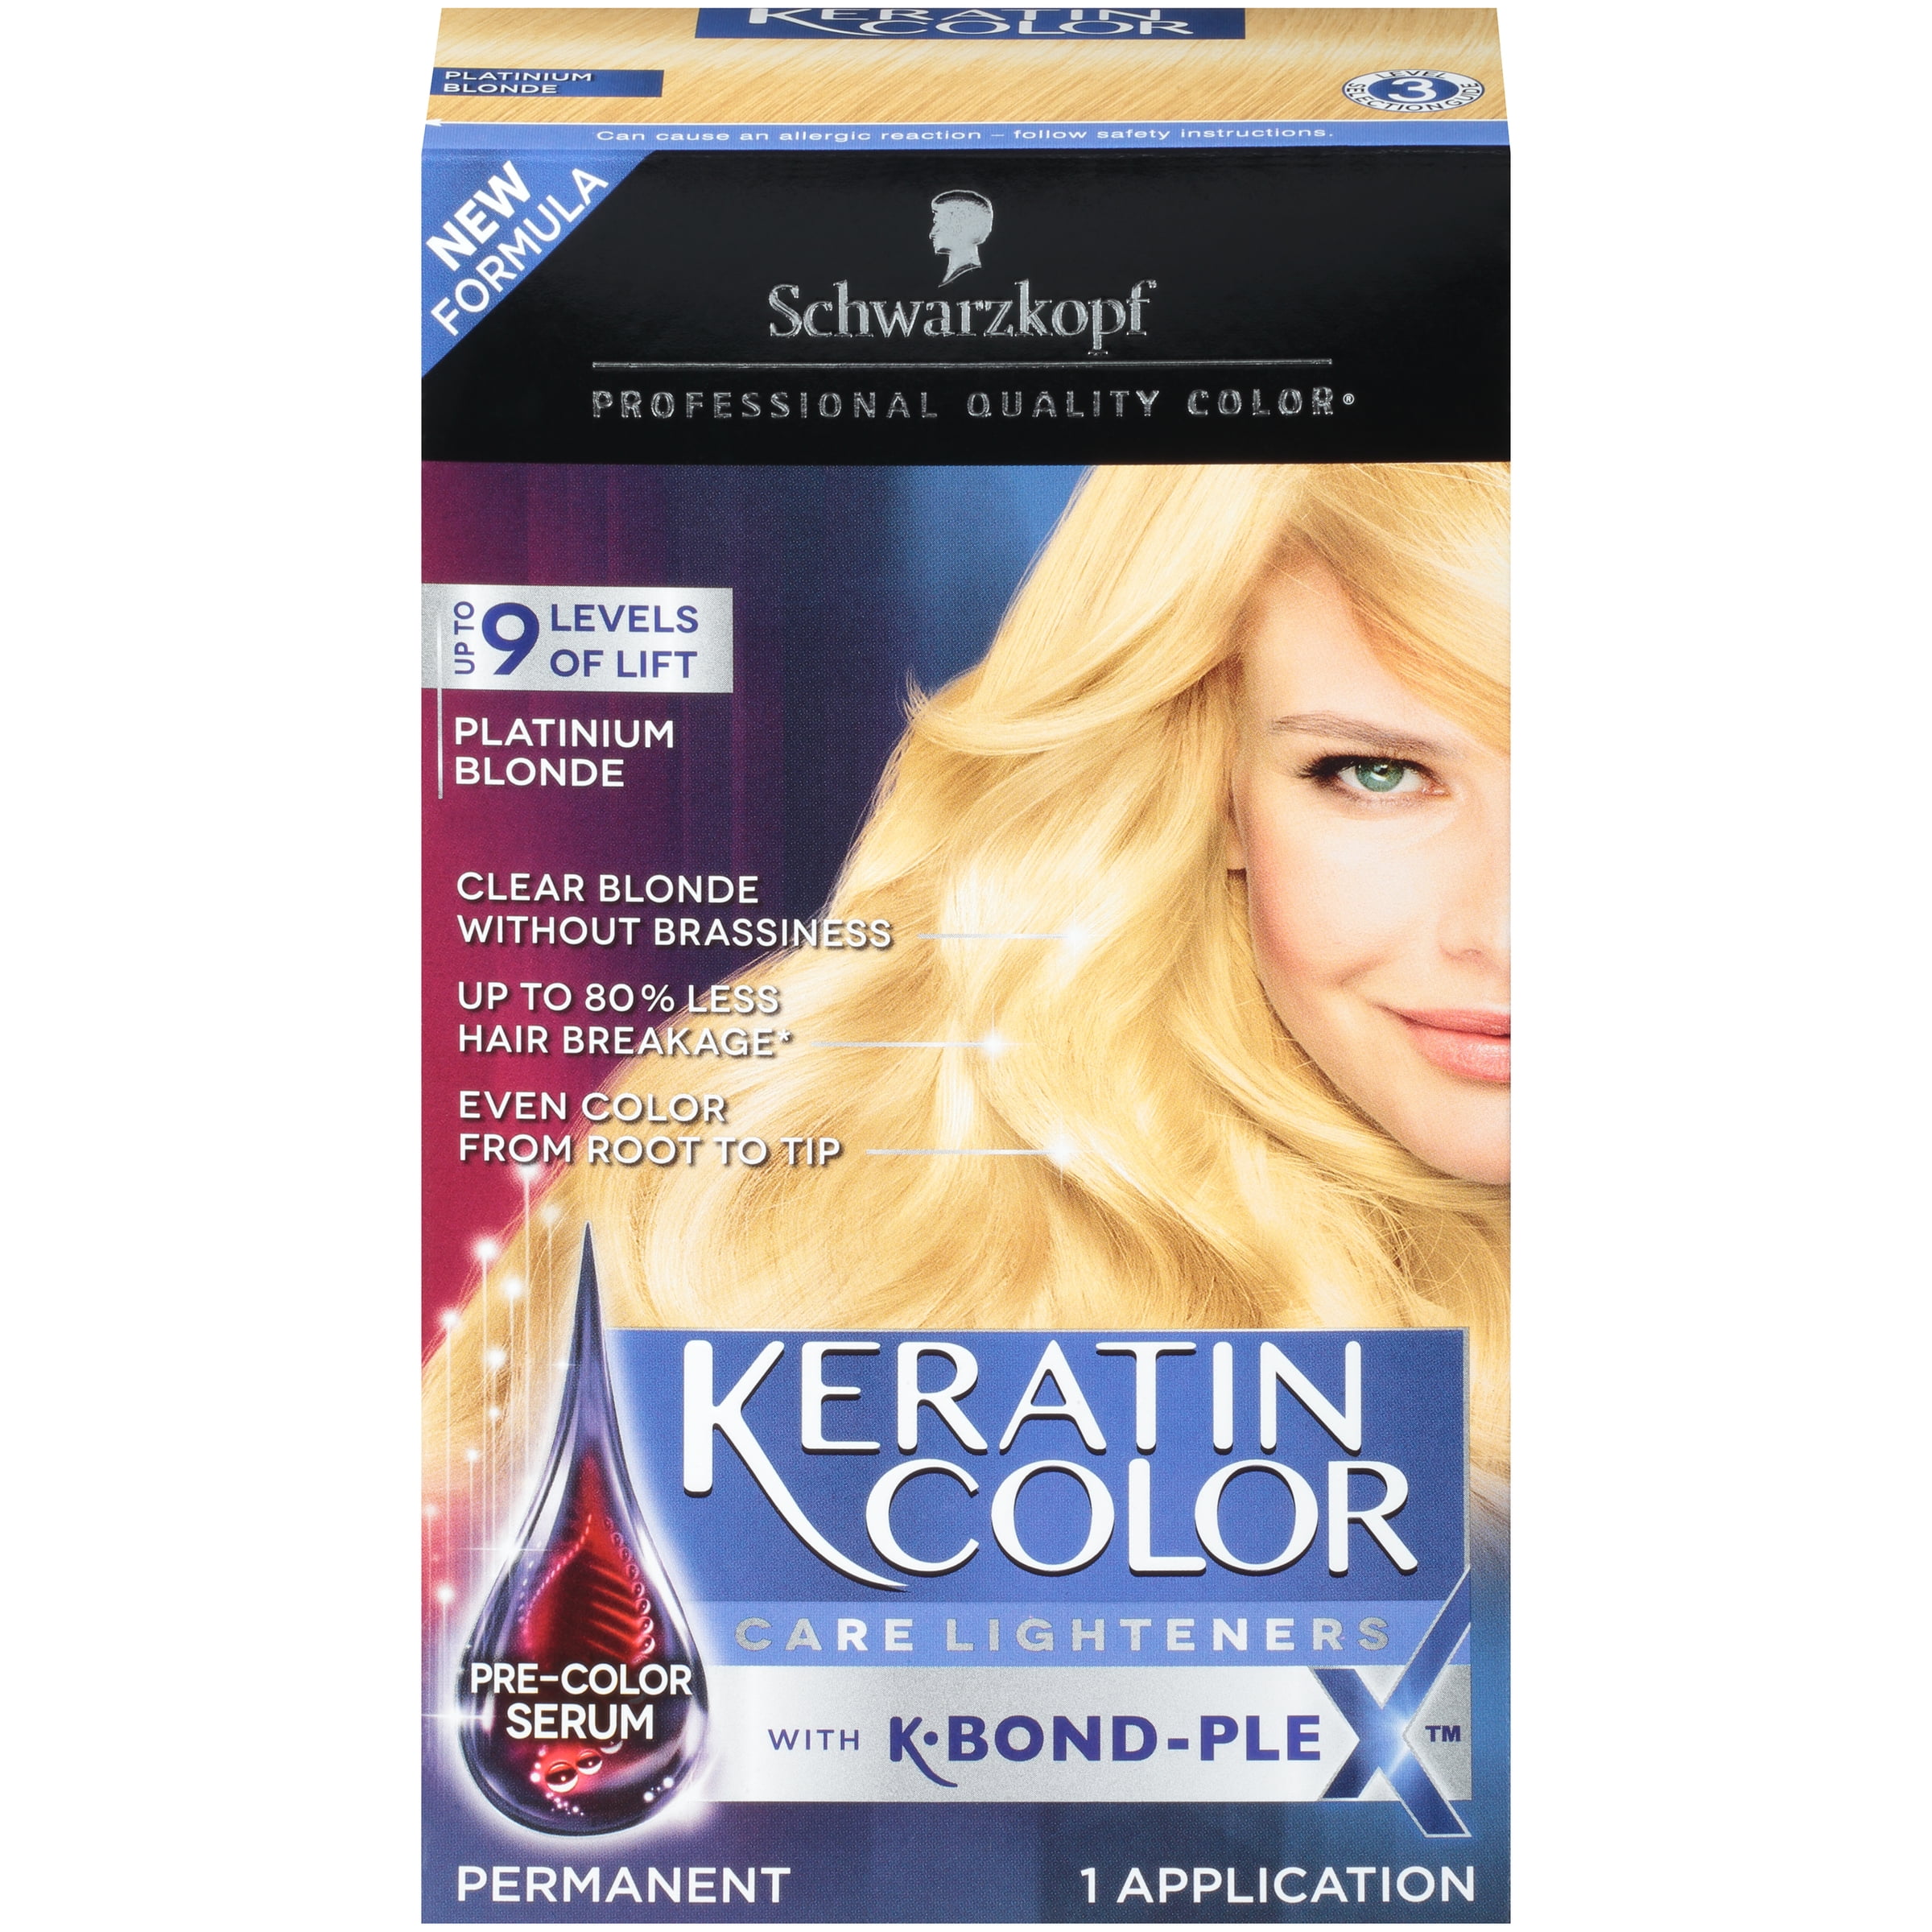 Schwarzkopf Keratin Color Care Lighteners Permanent Hair Color Cream,  Platinum Blonde 